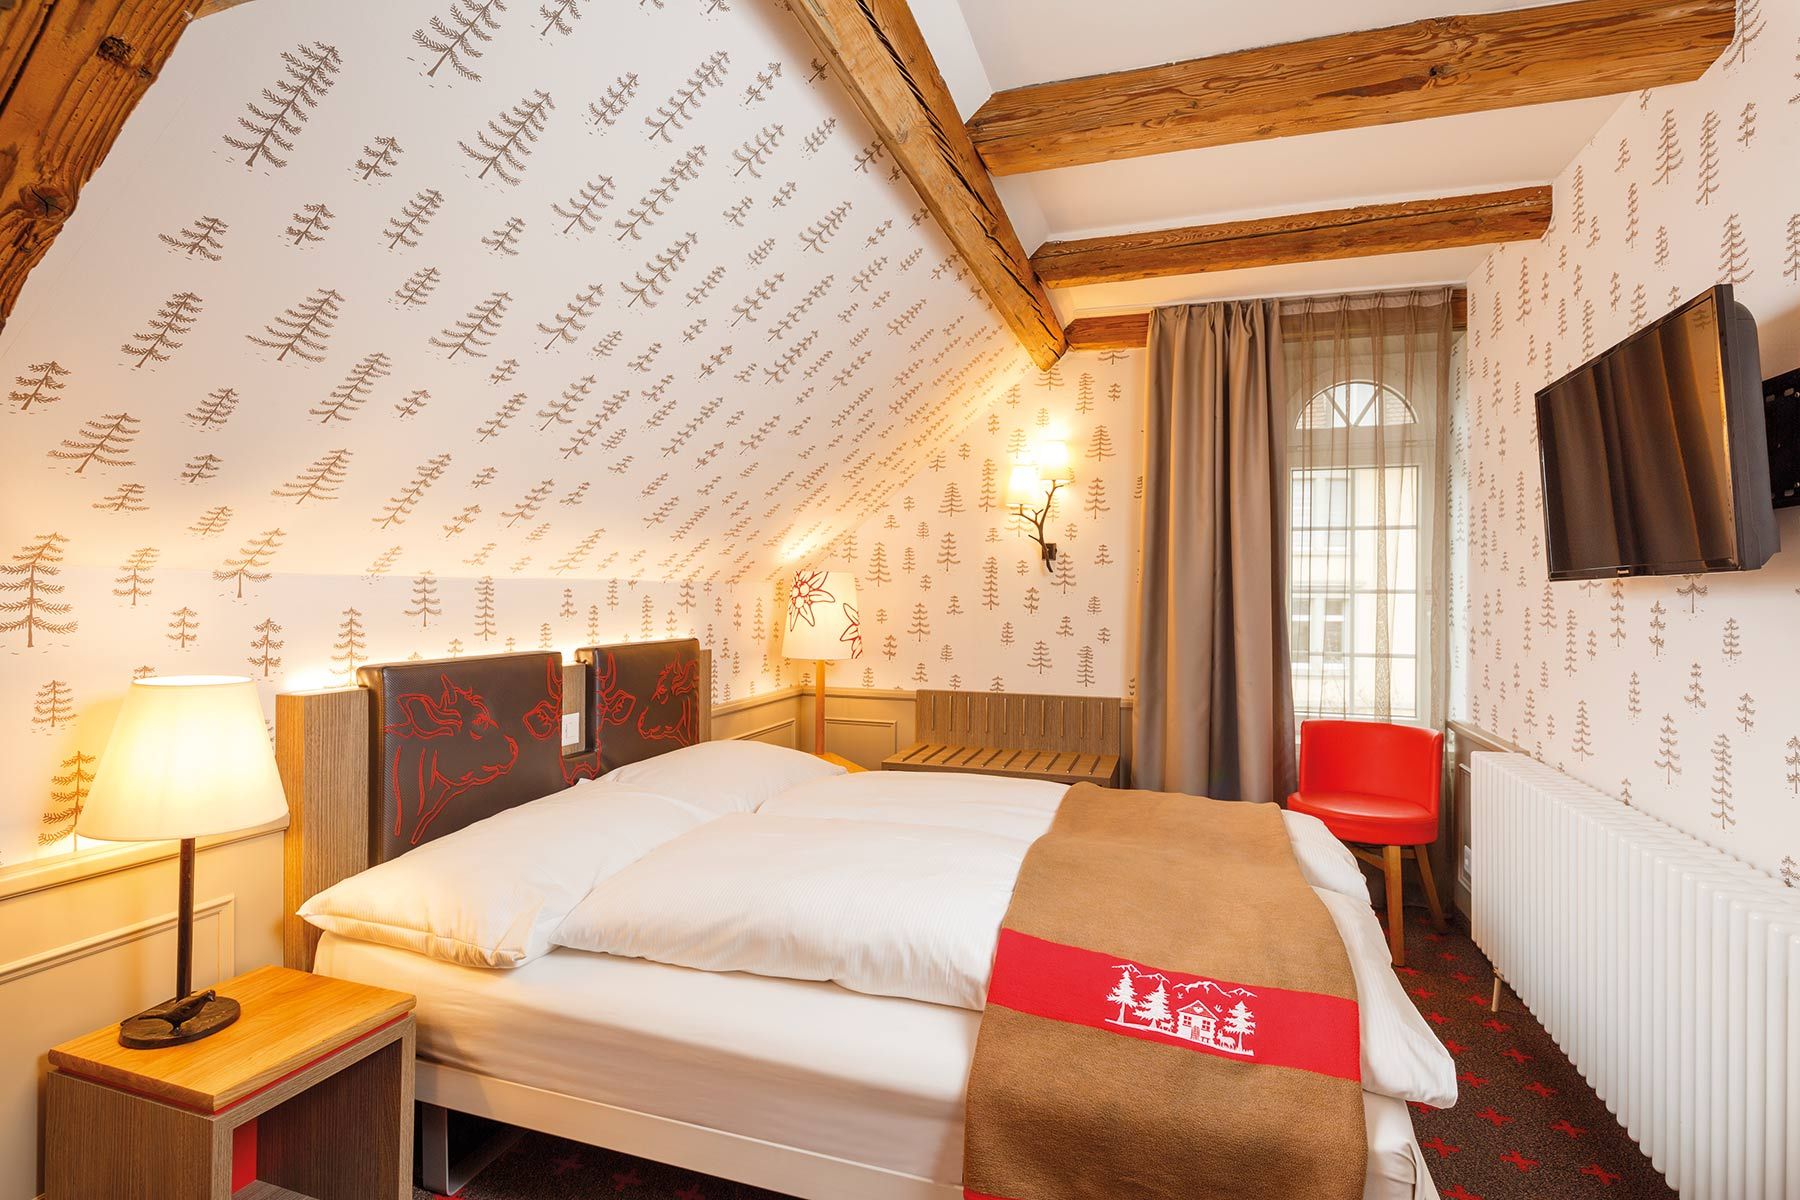 Hotel room of the Swiss Night Hotel